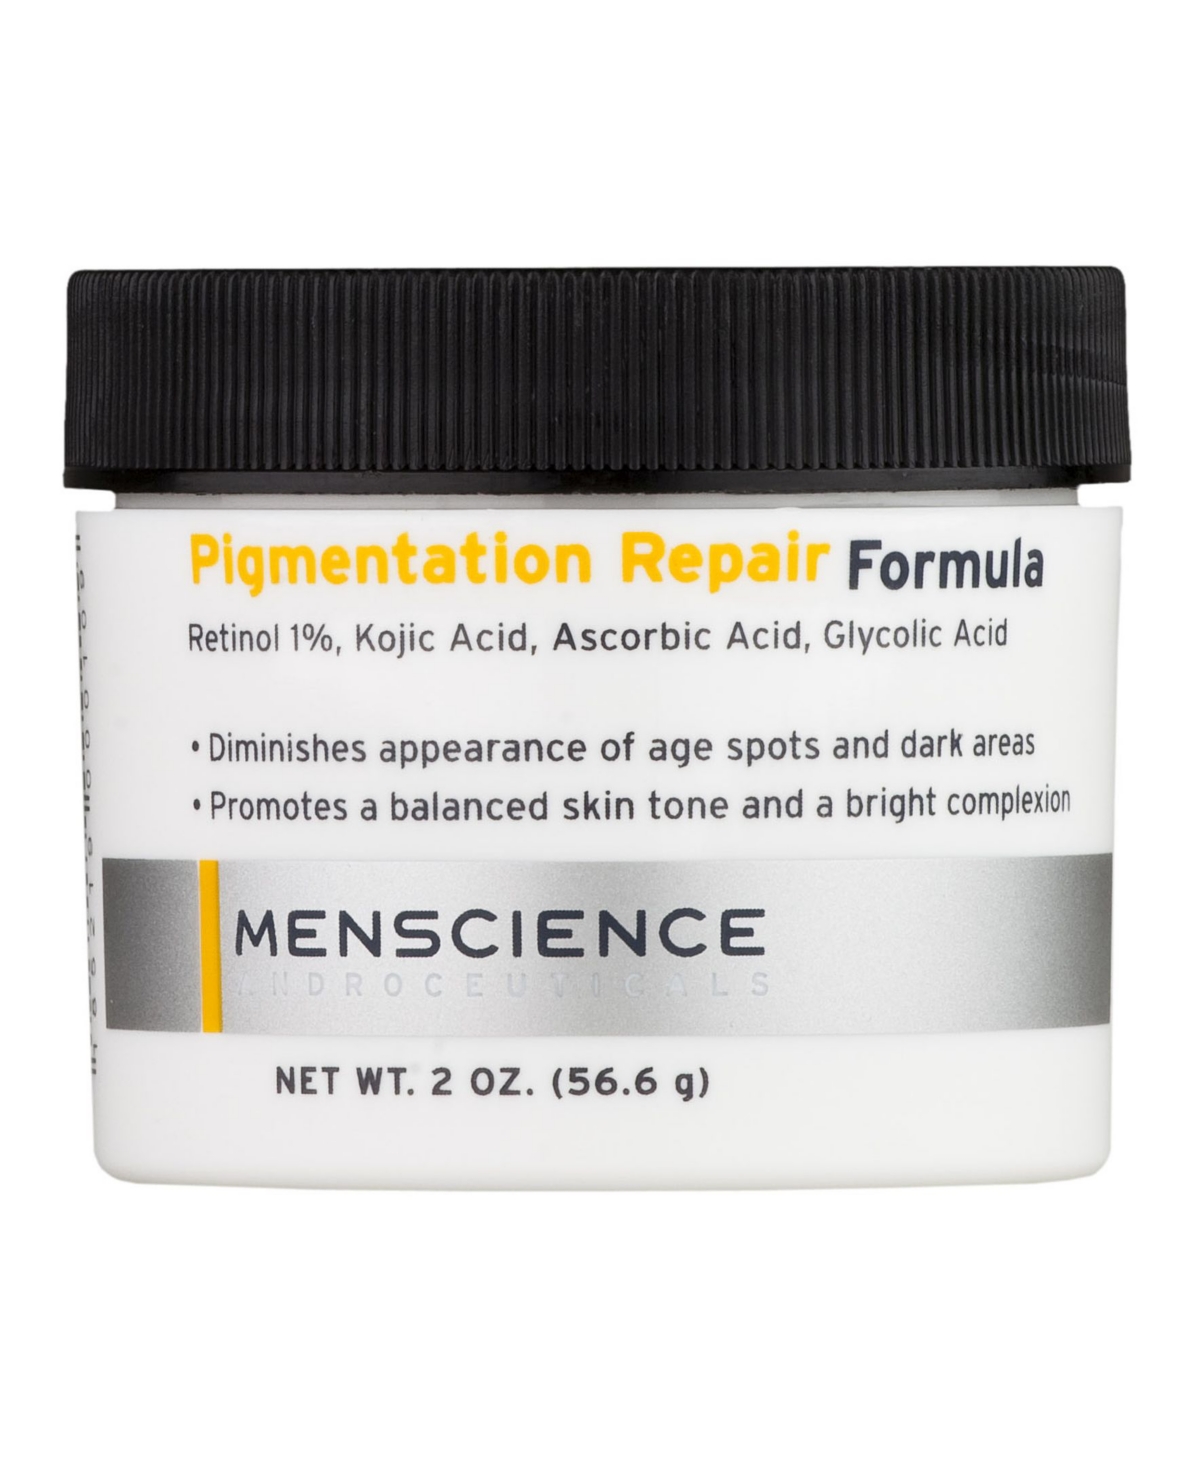 Menscience Pigmentation Repair Formula Dark Spots Cream For Men 2 Oz